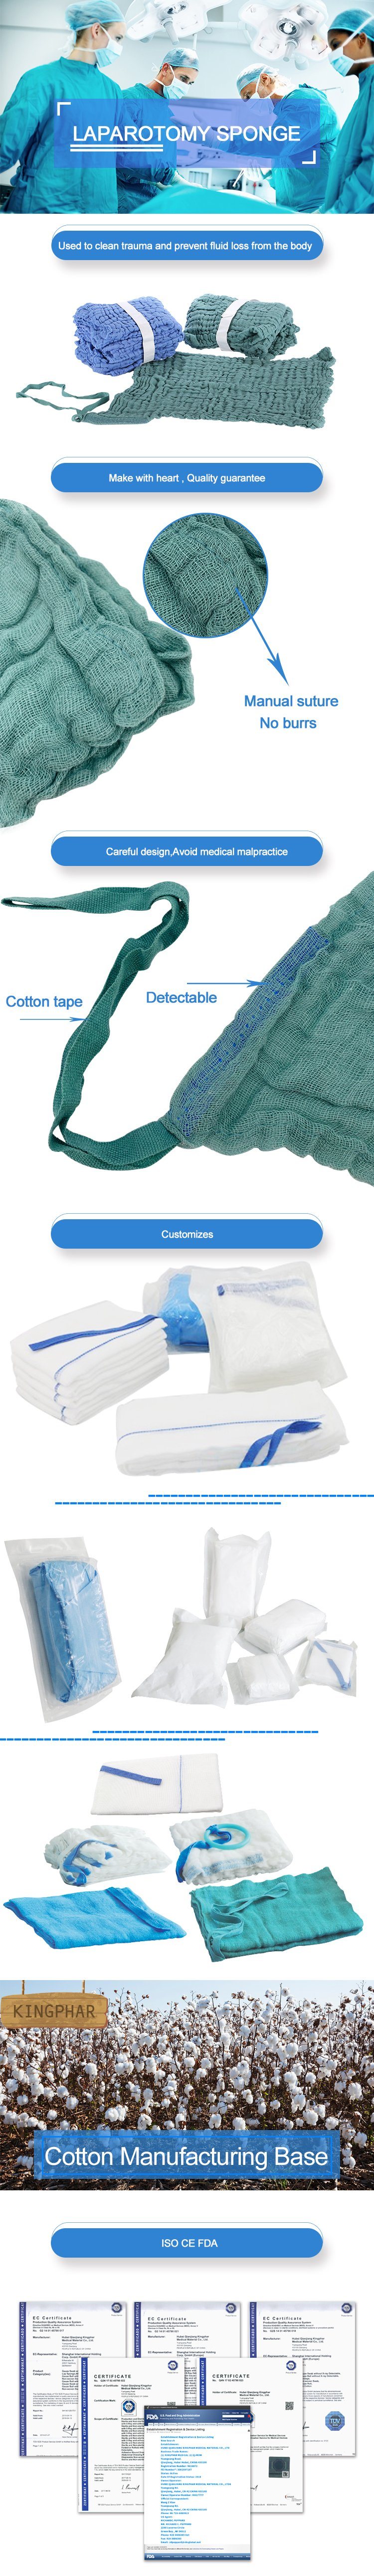 Prewashed Lap Sponge with Blue Loop Sterile Package 18 Inch by 18 Inch